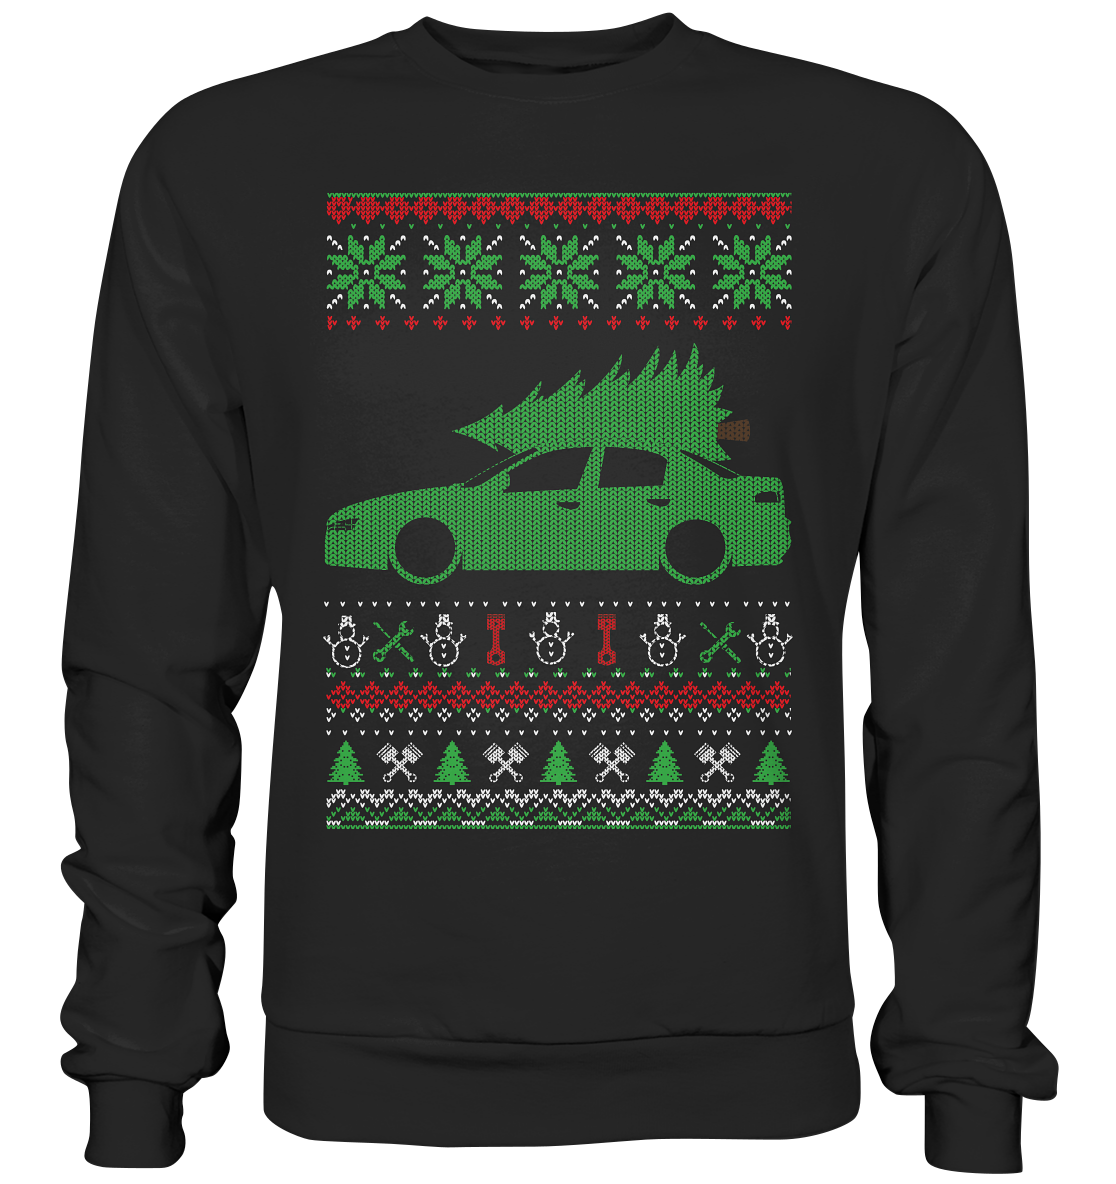 CODUGLY_ARGK159 - Premium Sweatshirt